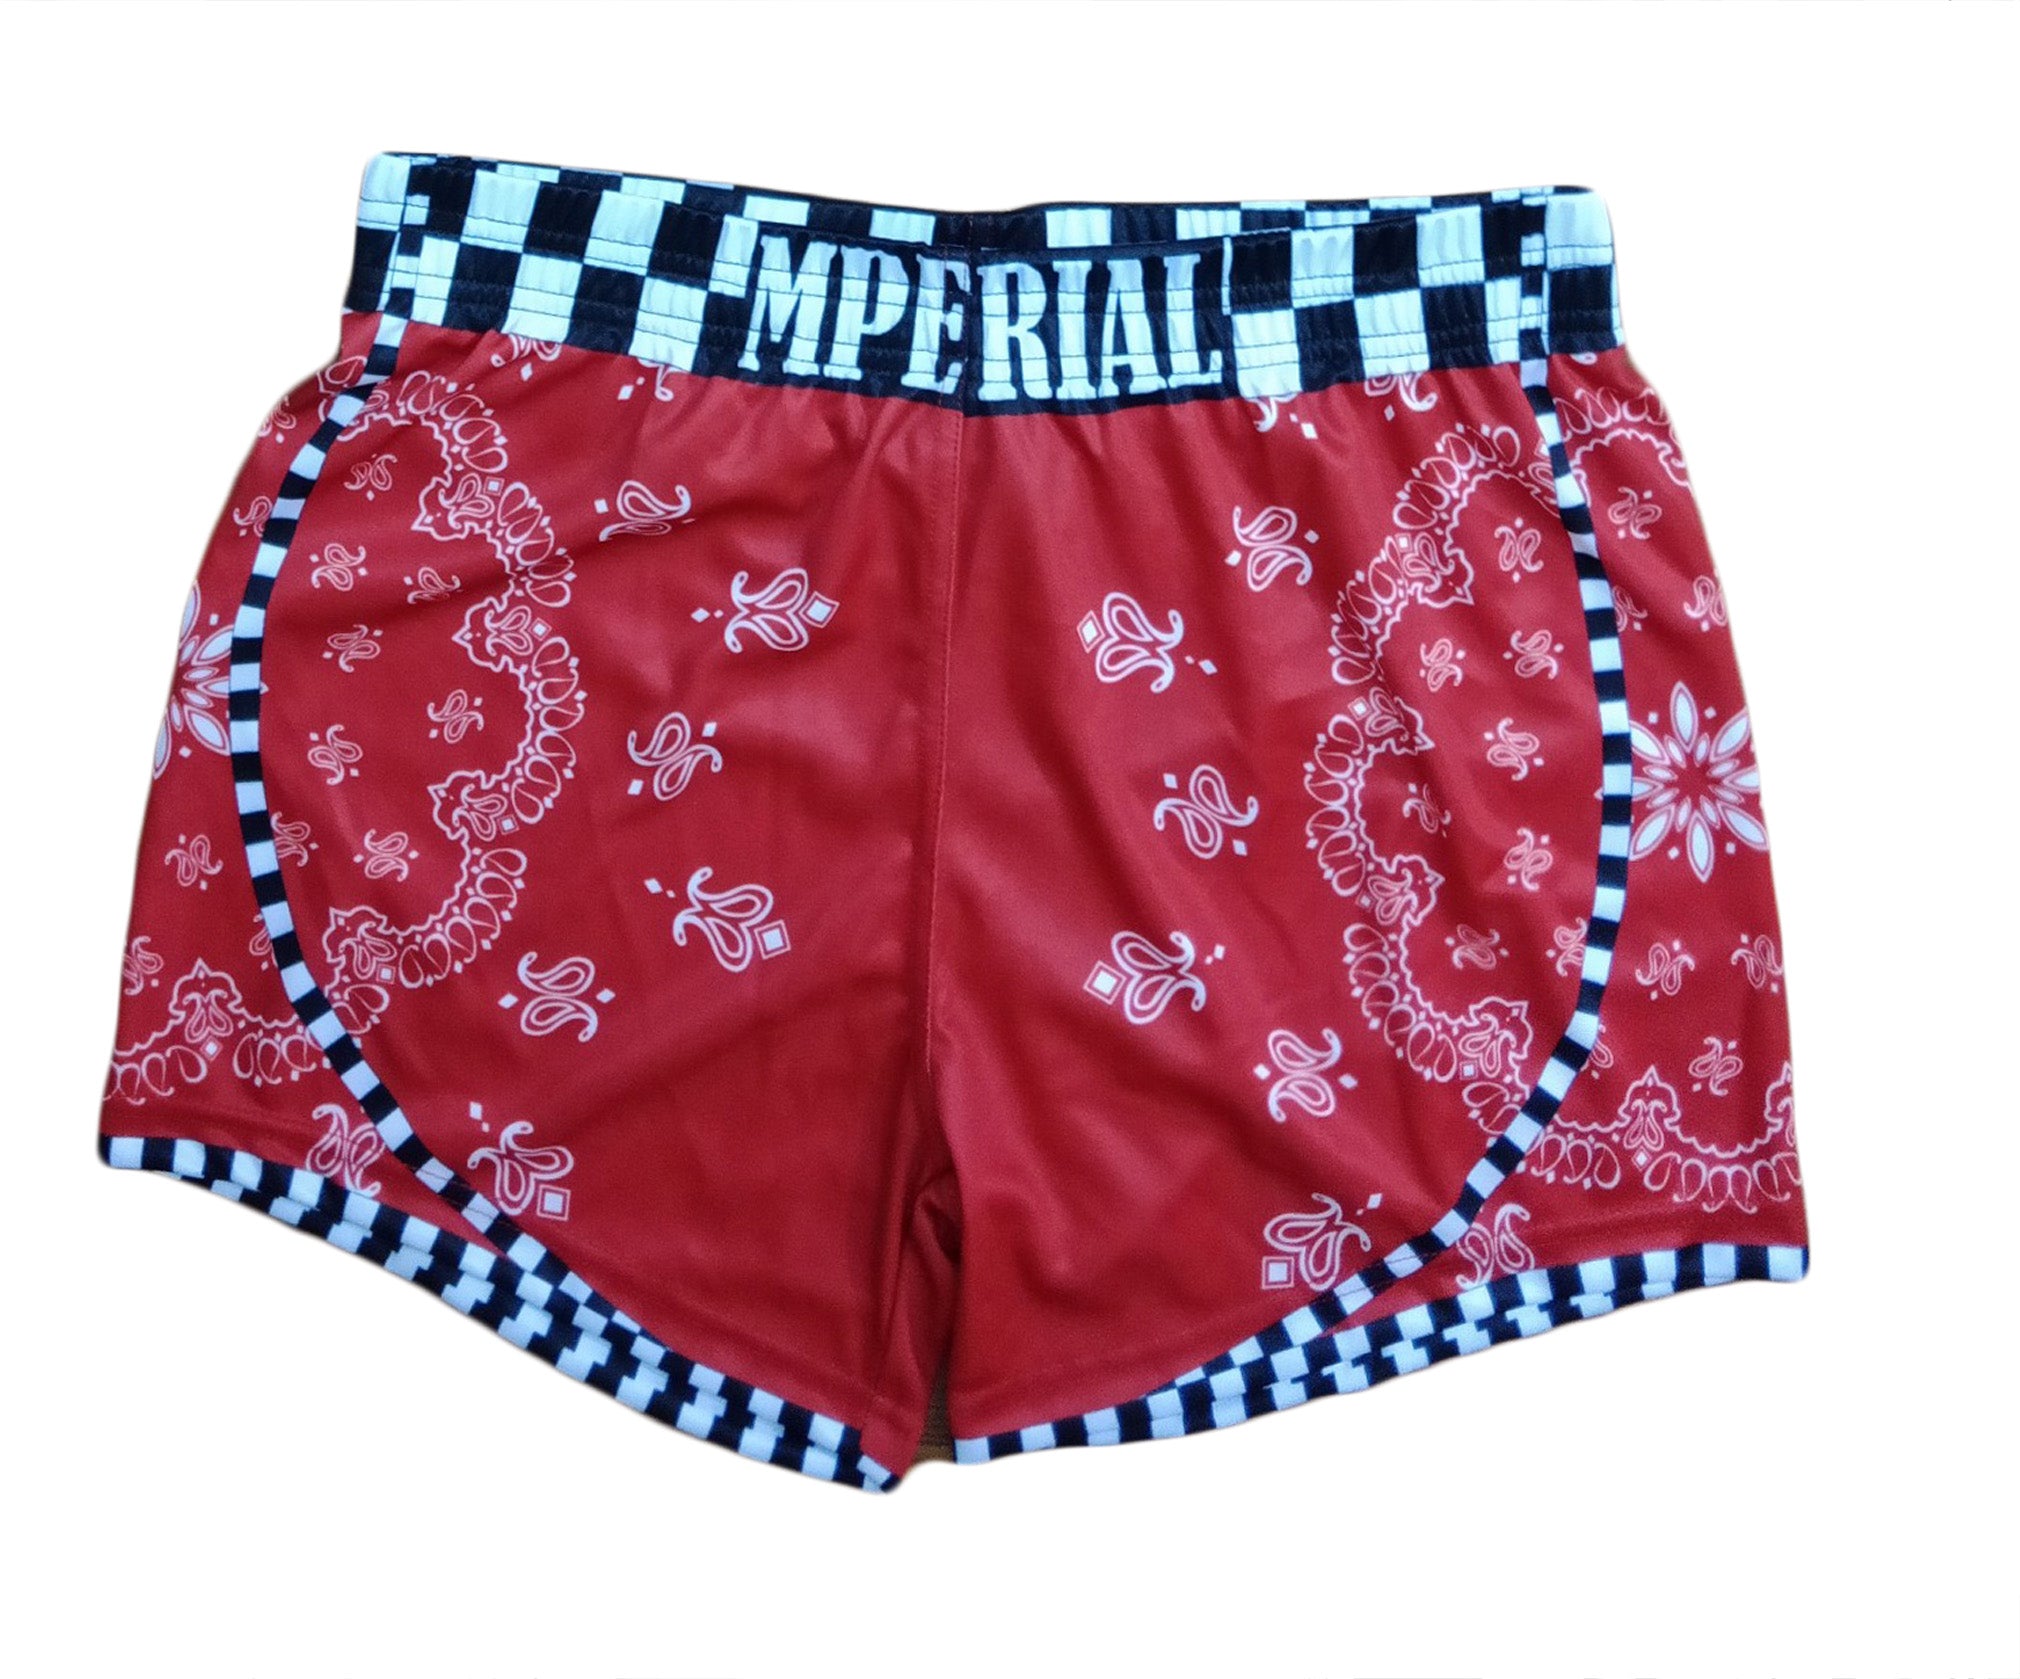 Mperial Bandana Ladies Shorts (red)